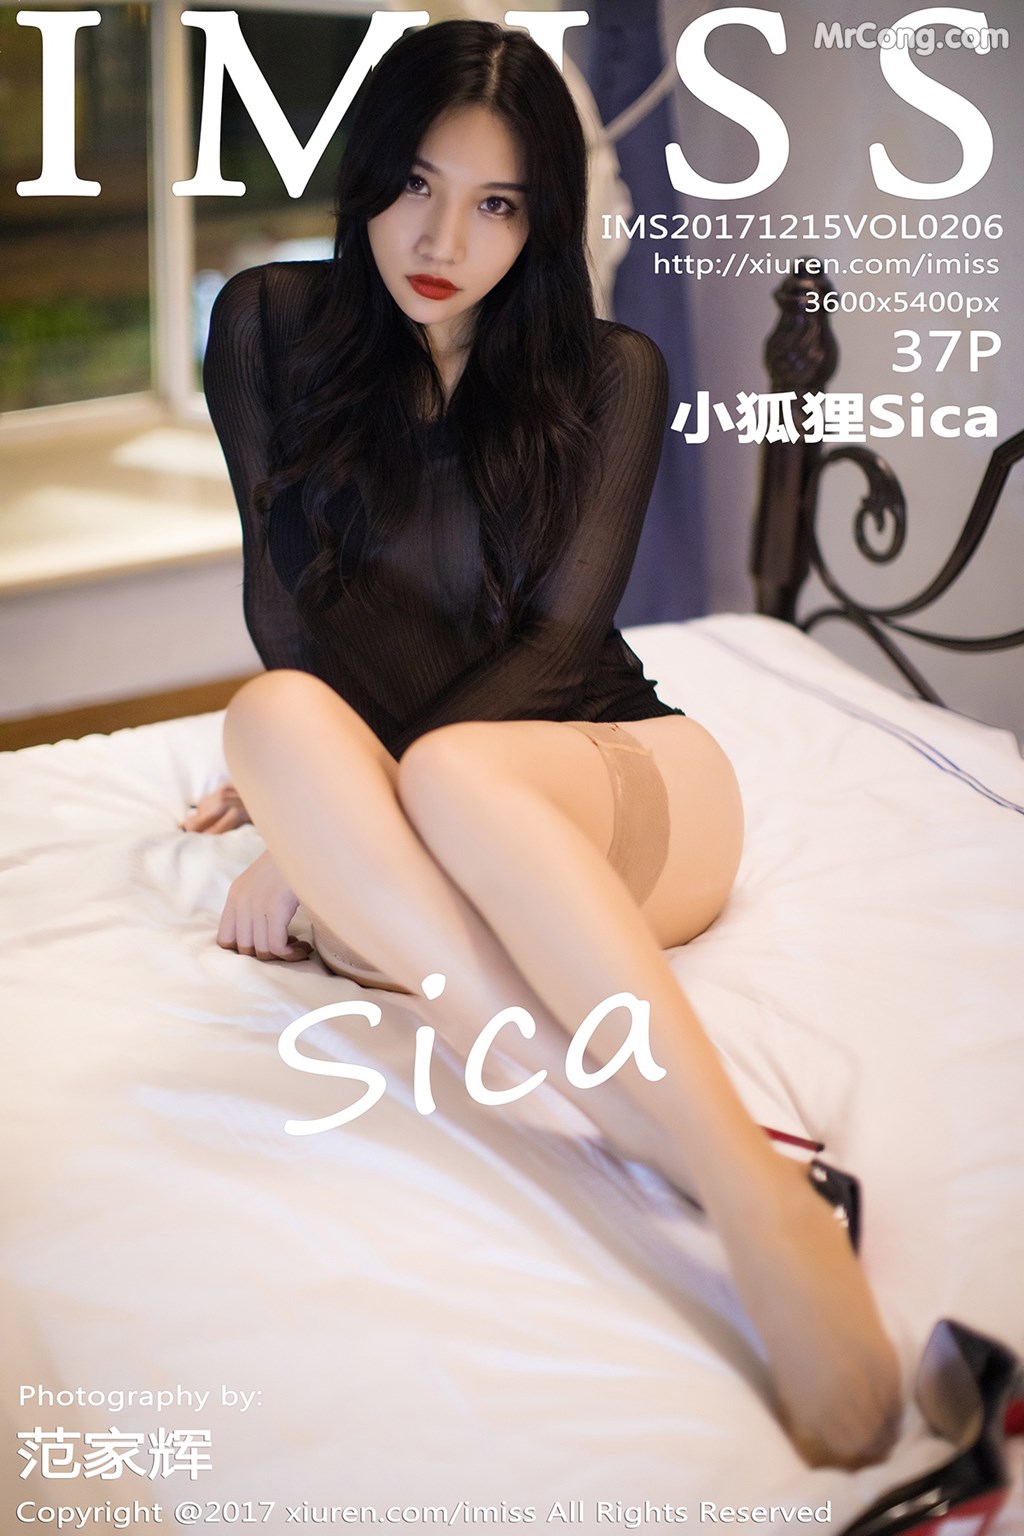 IMISS Vol. 2006: Model Xiao Hu Li (小 狐狸 Sica) (38 photos)